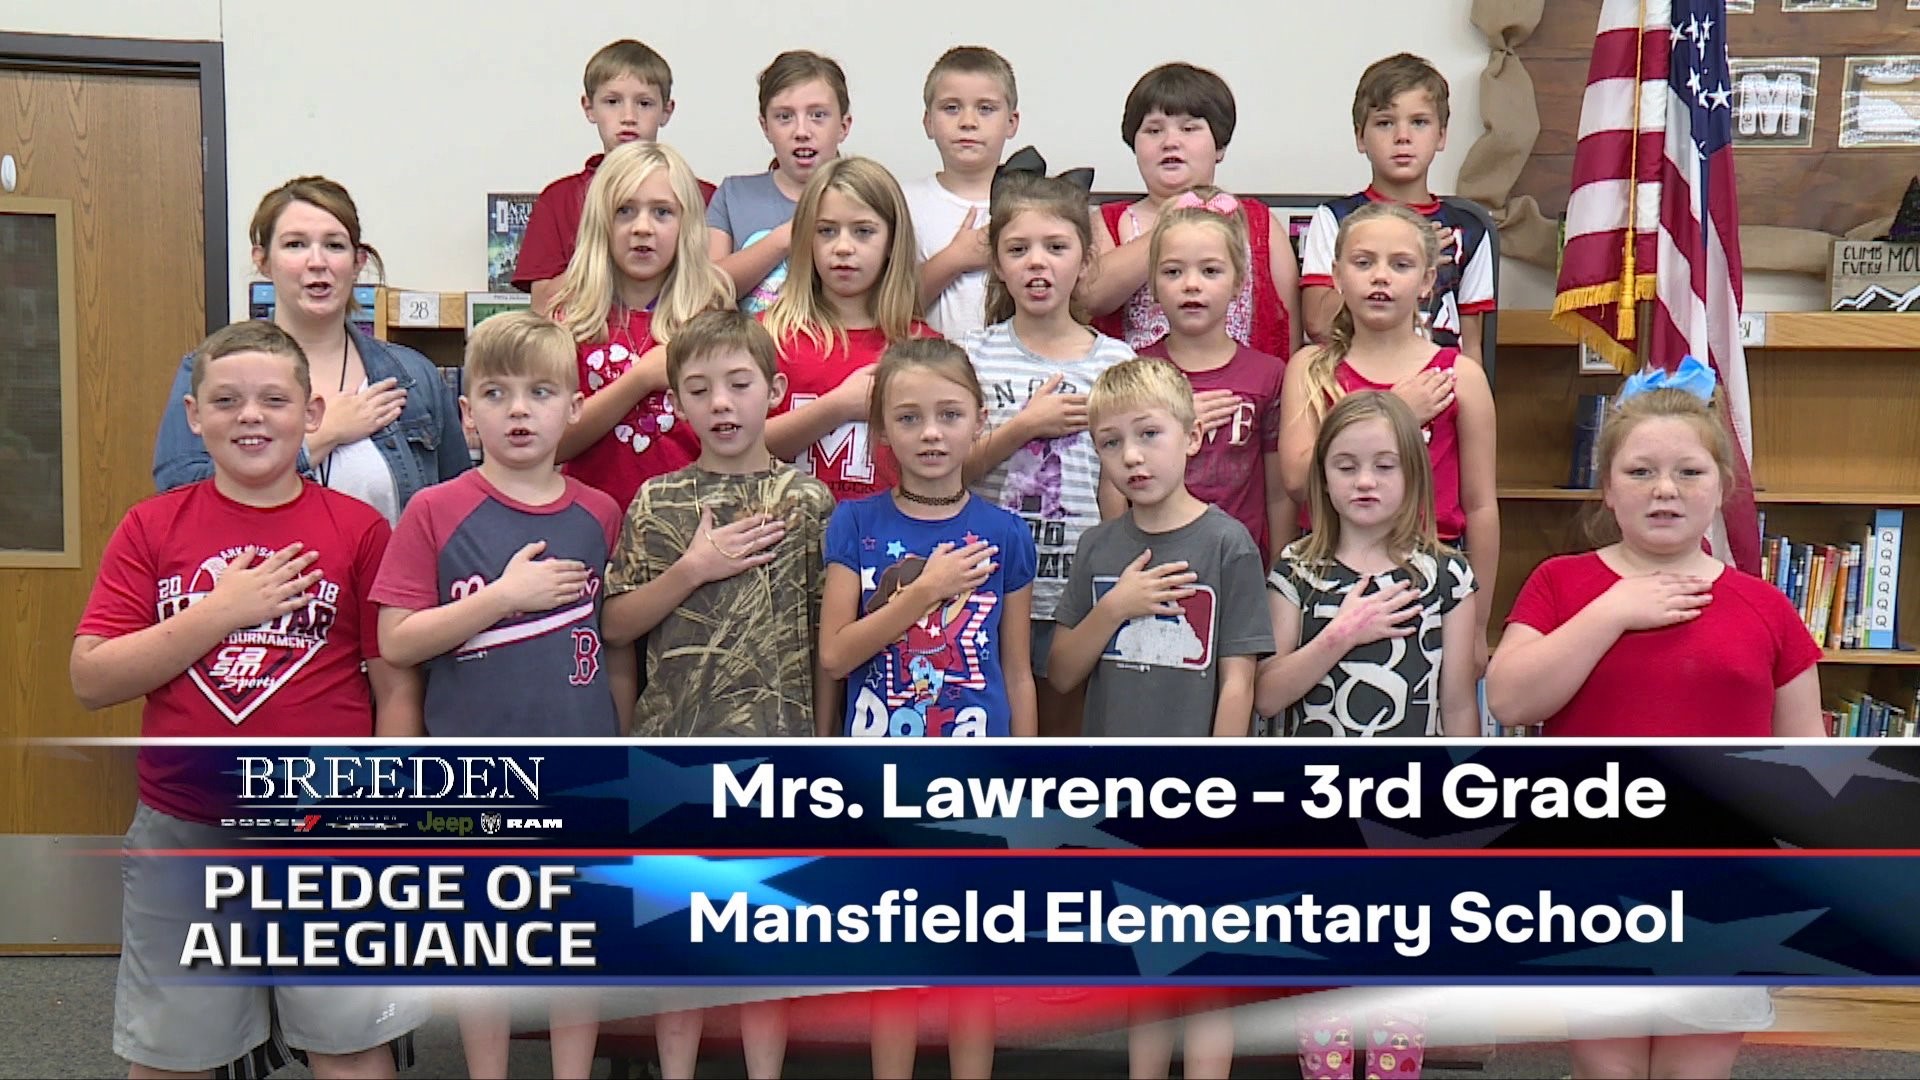 Mrs. Lawrence 3rd Grade Mansfield Elementary School